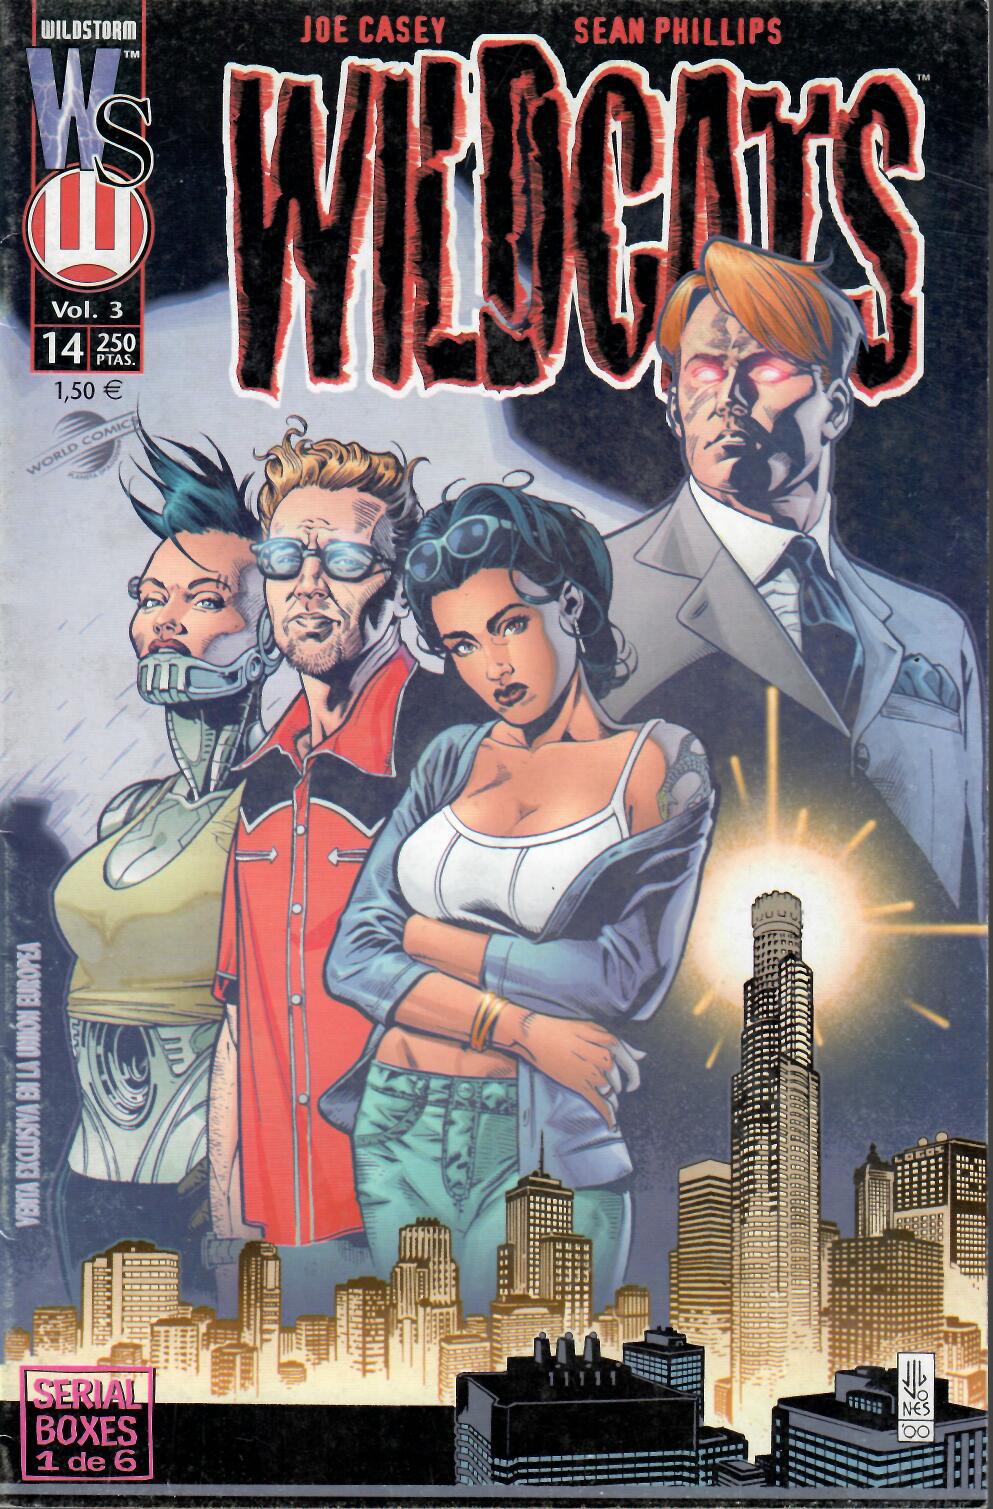 WildC.A.T.S. v3. World Comics 1999. Nº 14